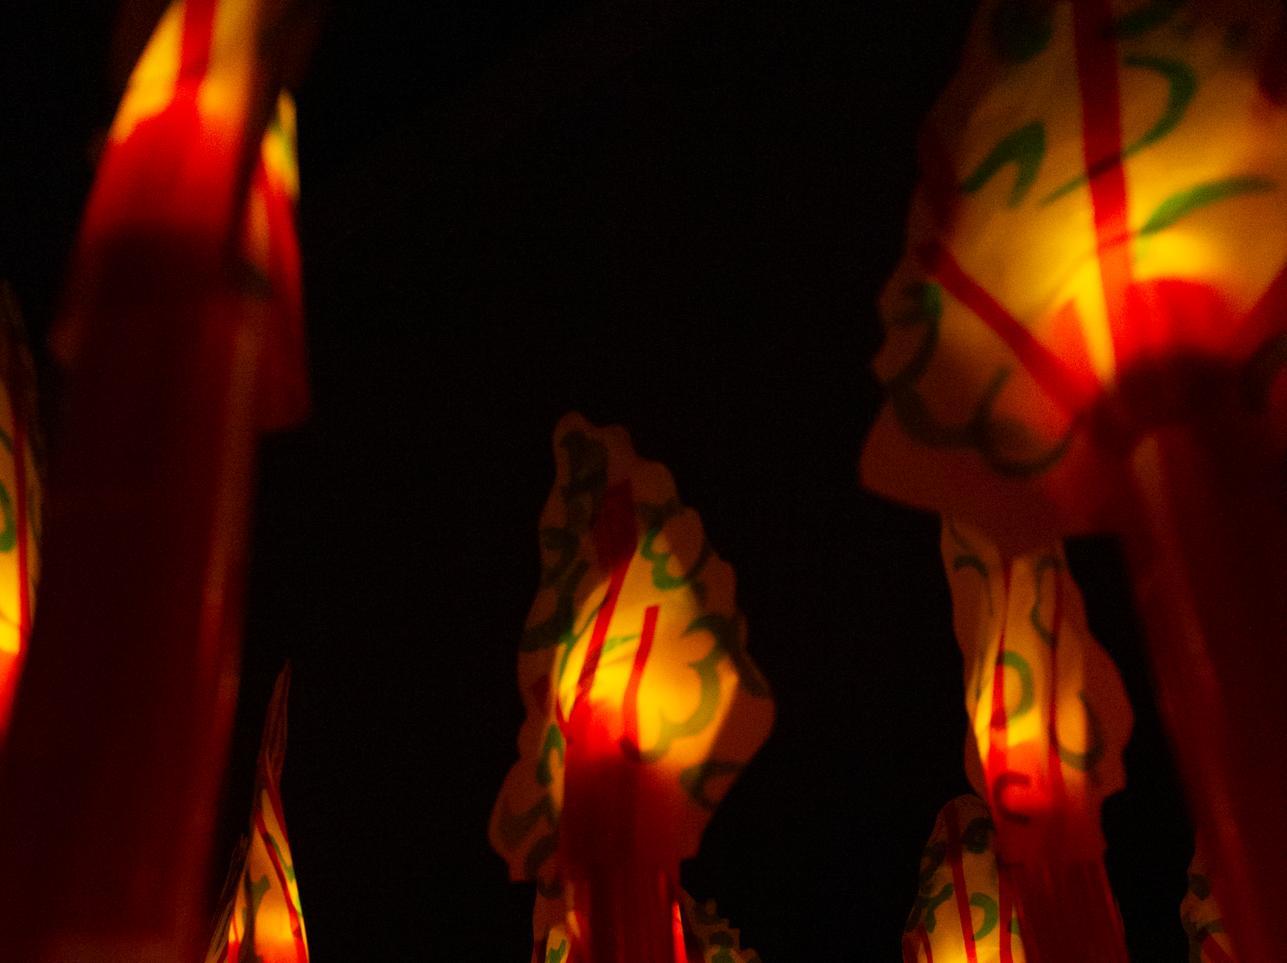 The rhubarb lanterns looked stunning